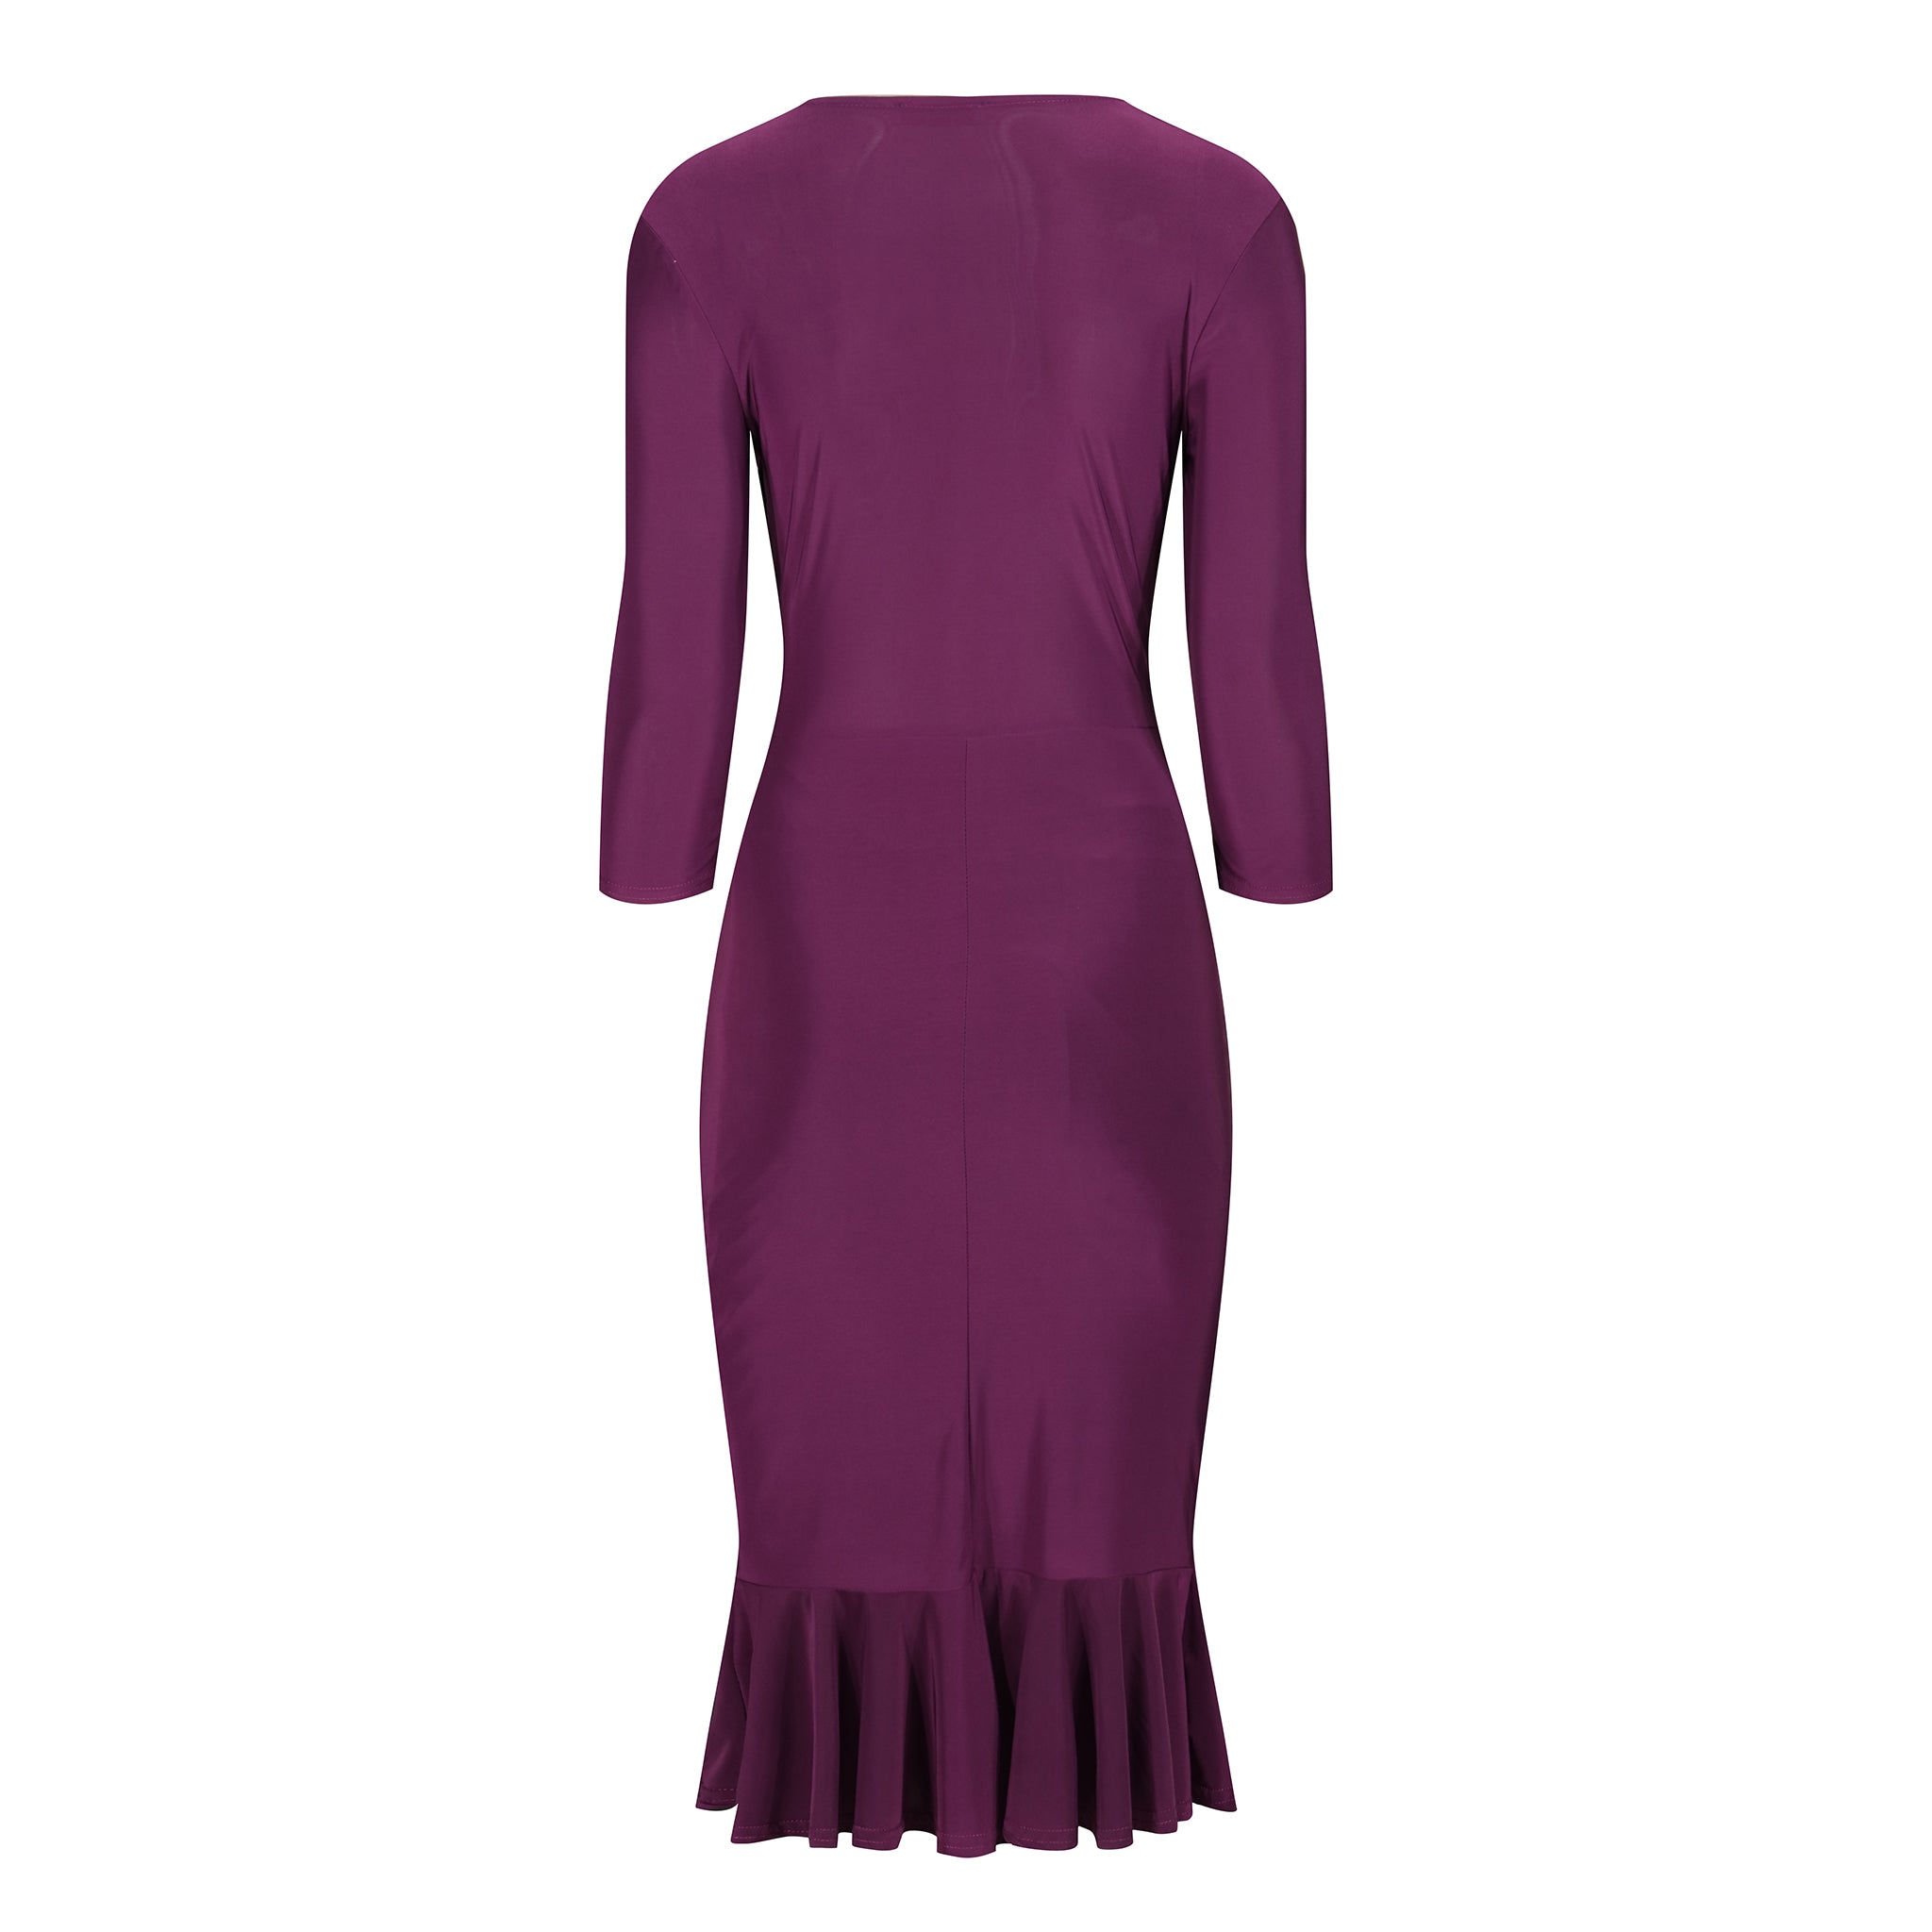 Plum Purple Wrap Effect Cocktail Dress w/ Waterfall Peplum Hem & 3/4 Sleeves